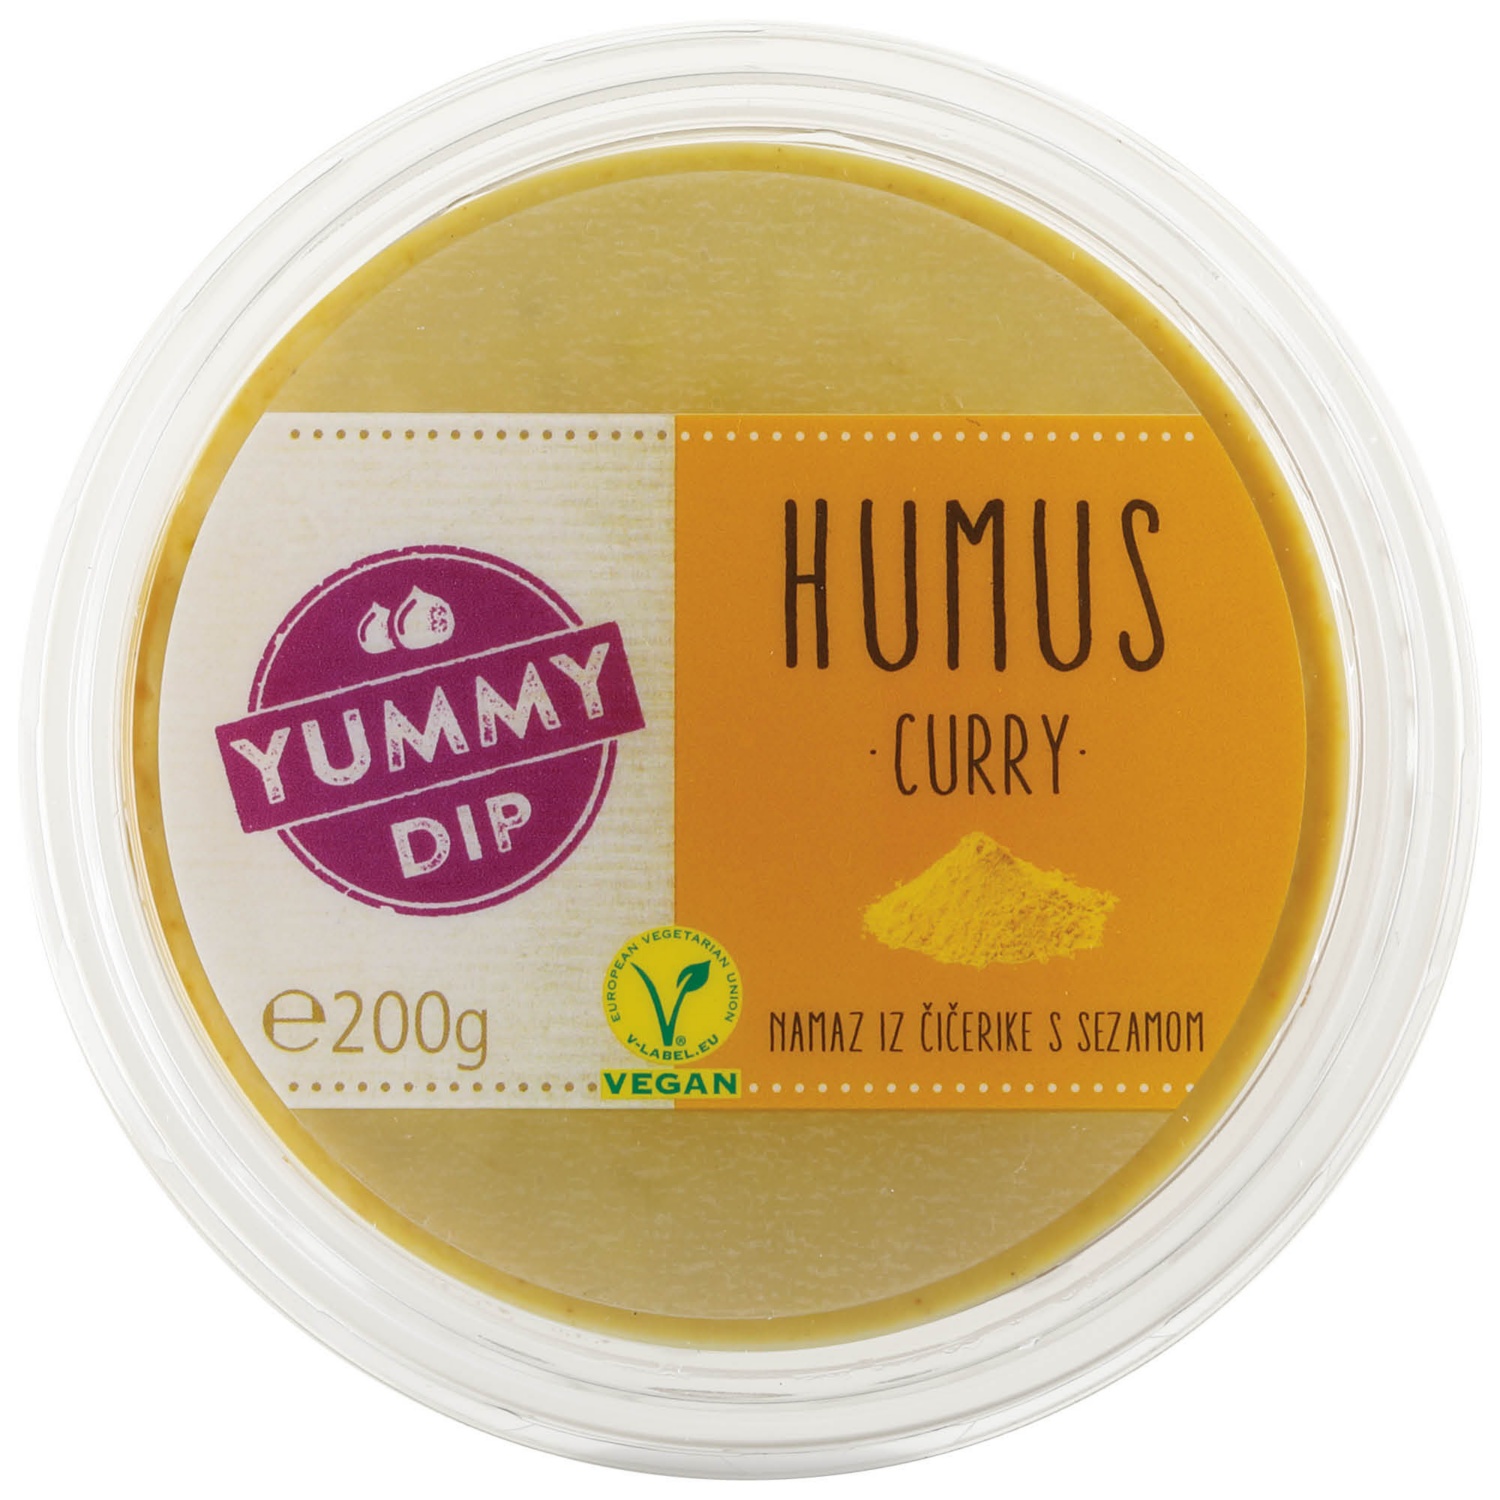 YUMMY DIP Hummus, Curry